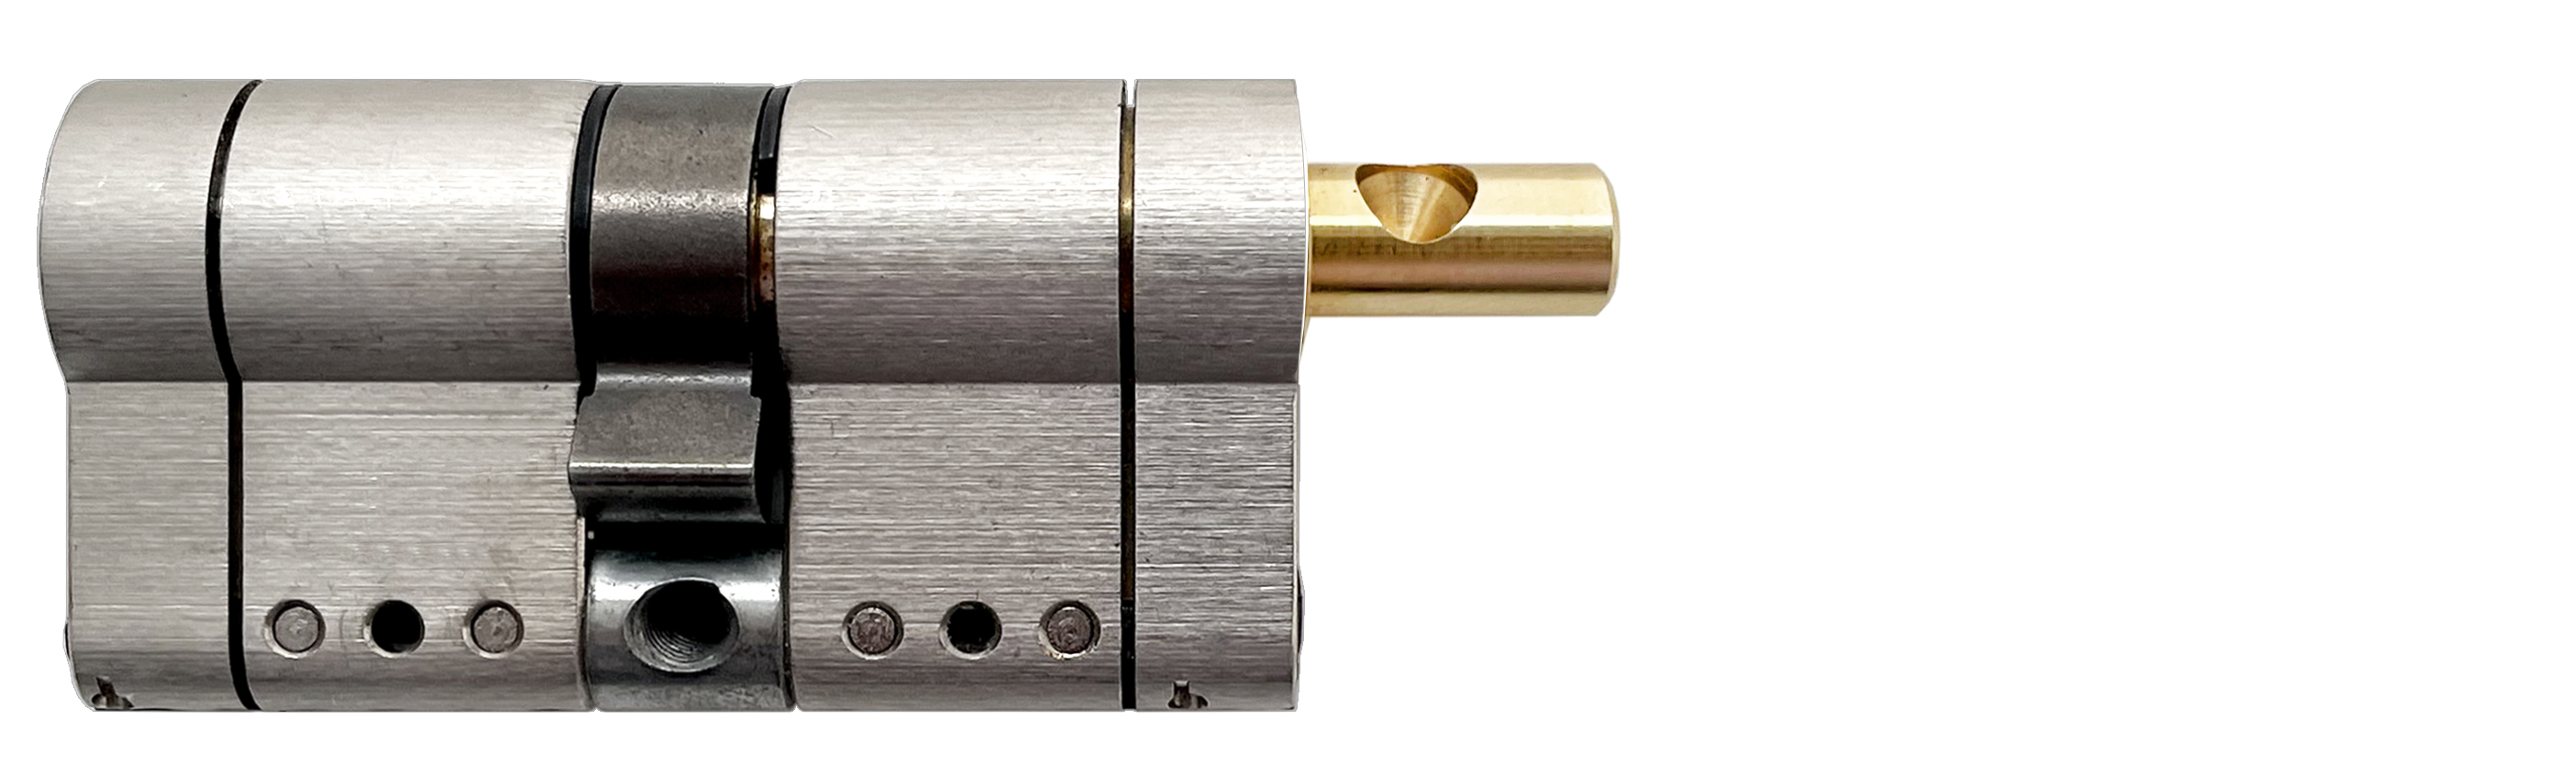 Цилиндр MOTTURA PRO 87(41+46)мм, ключ/вертушка, никель цилиндр mottura pro 87 41 46 мм ключ вертушка никель